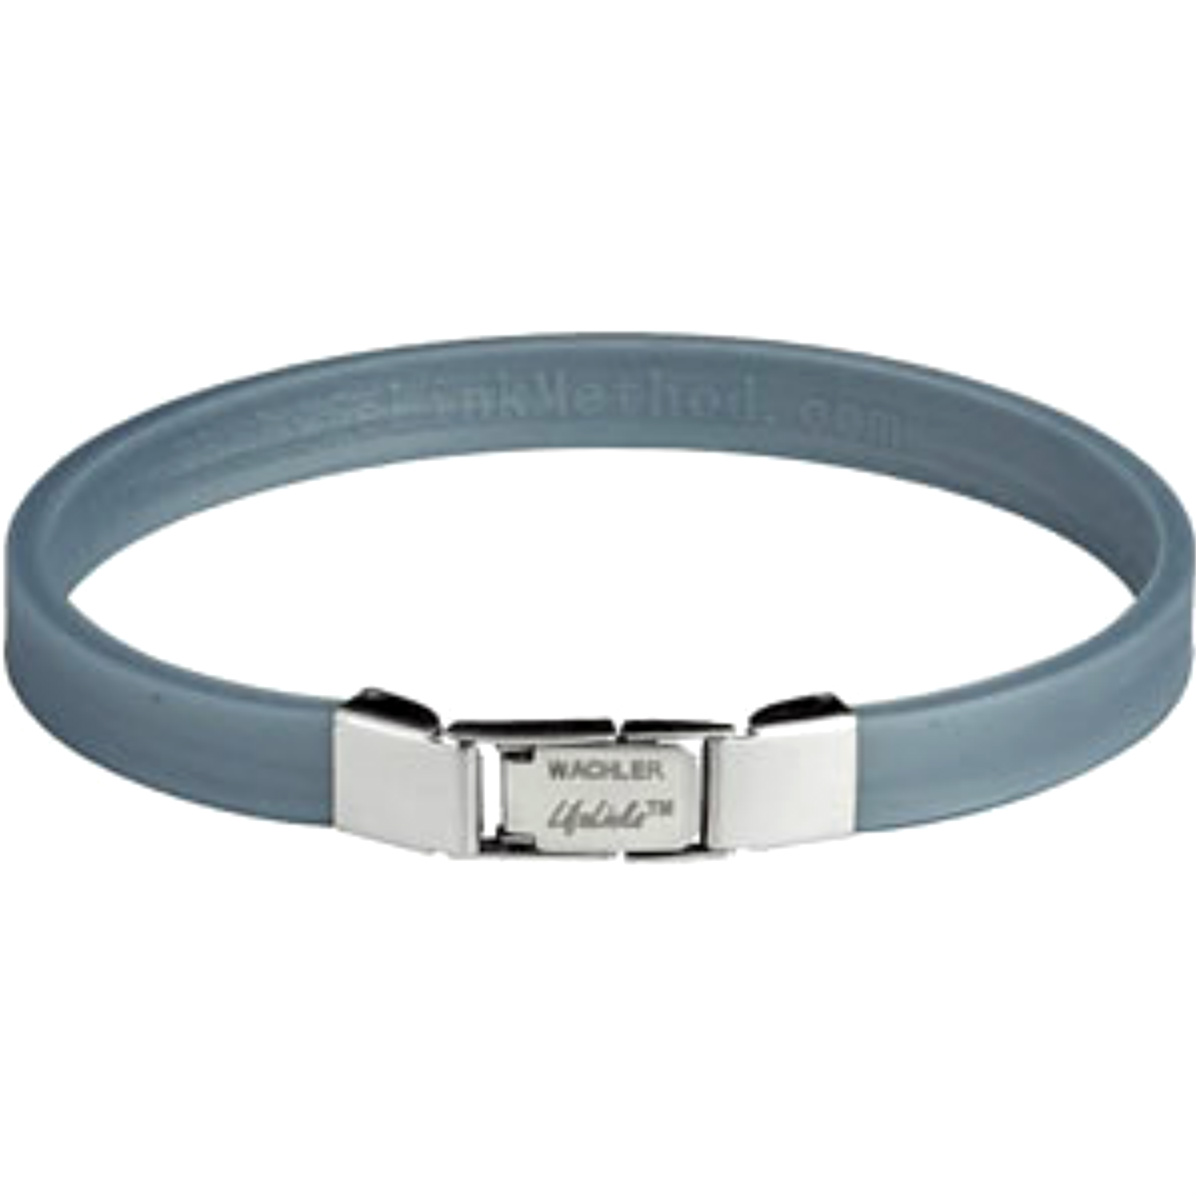 LifeLink Silver Rubber Bracelet with Clasp